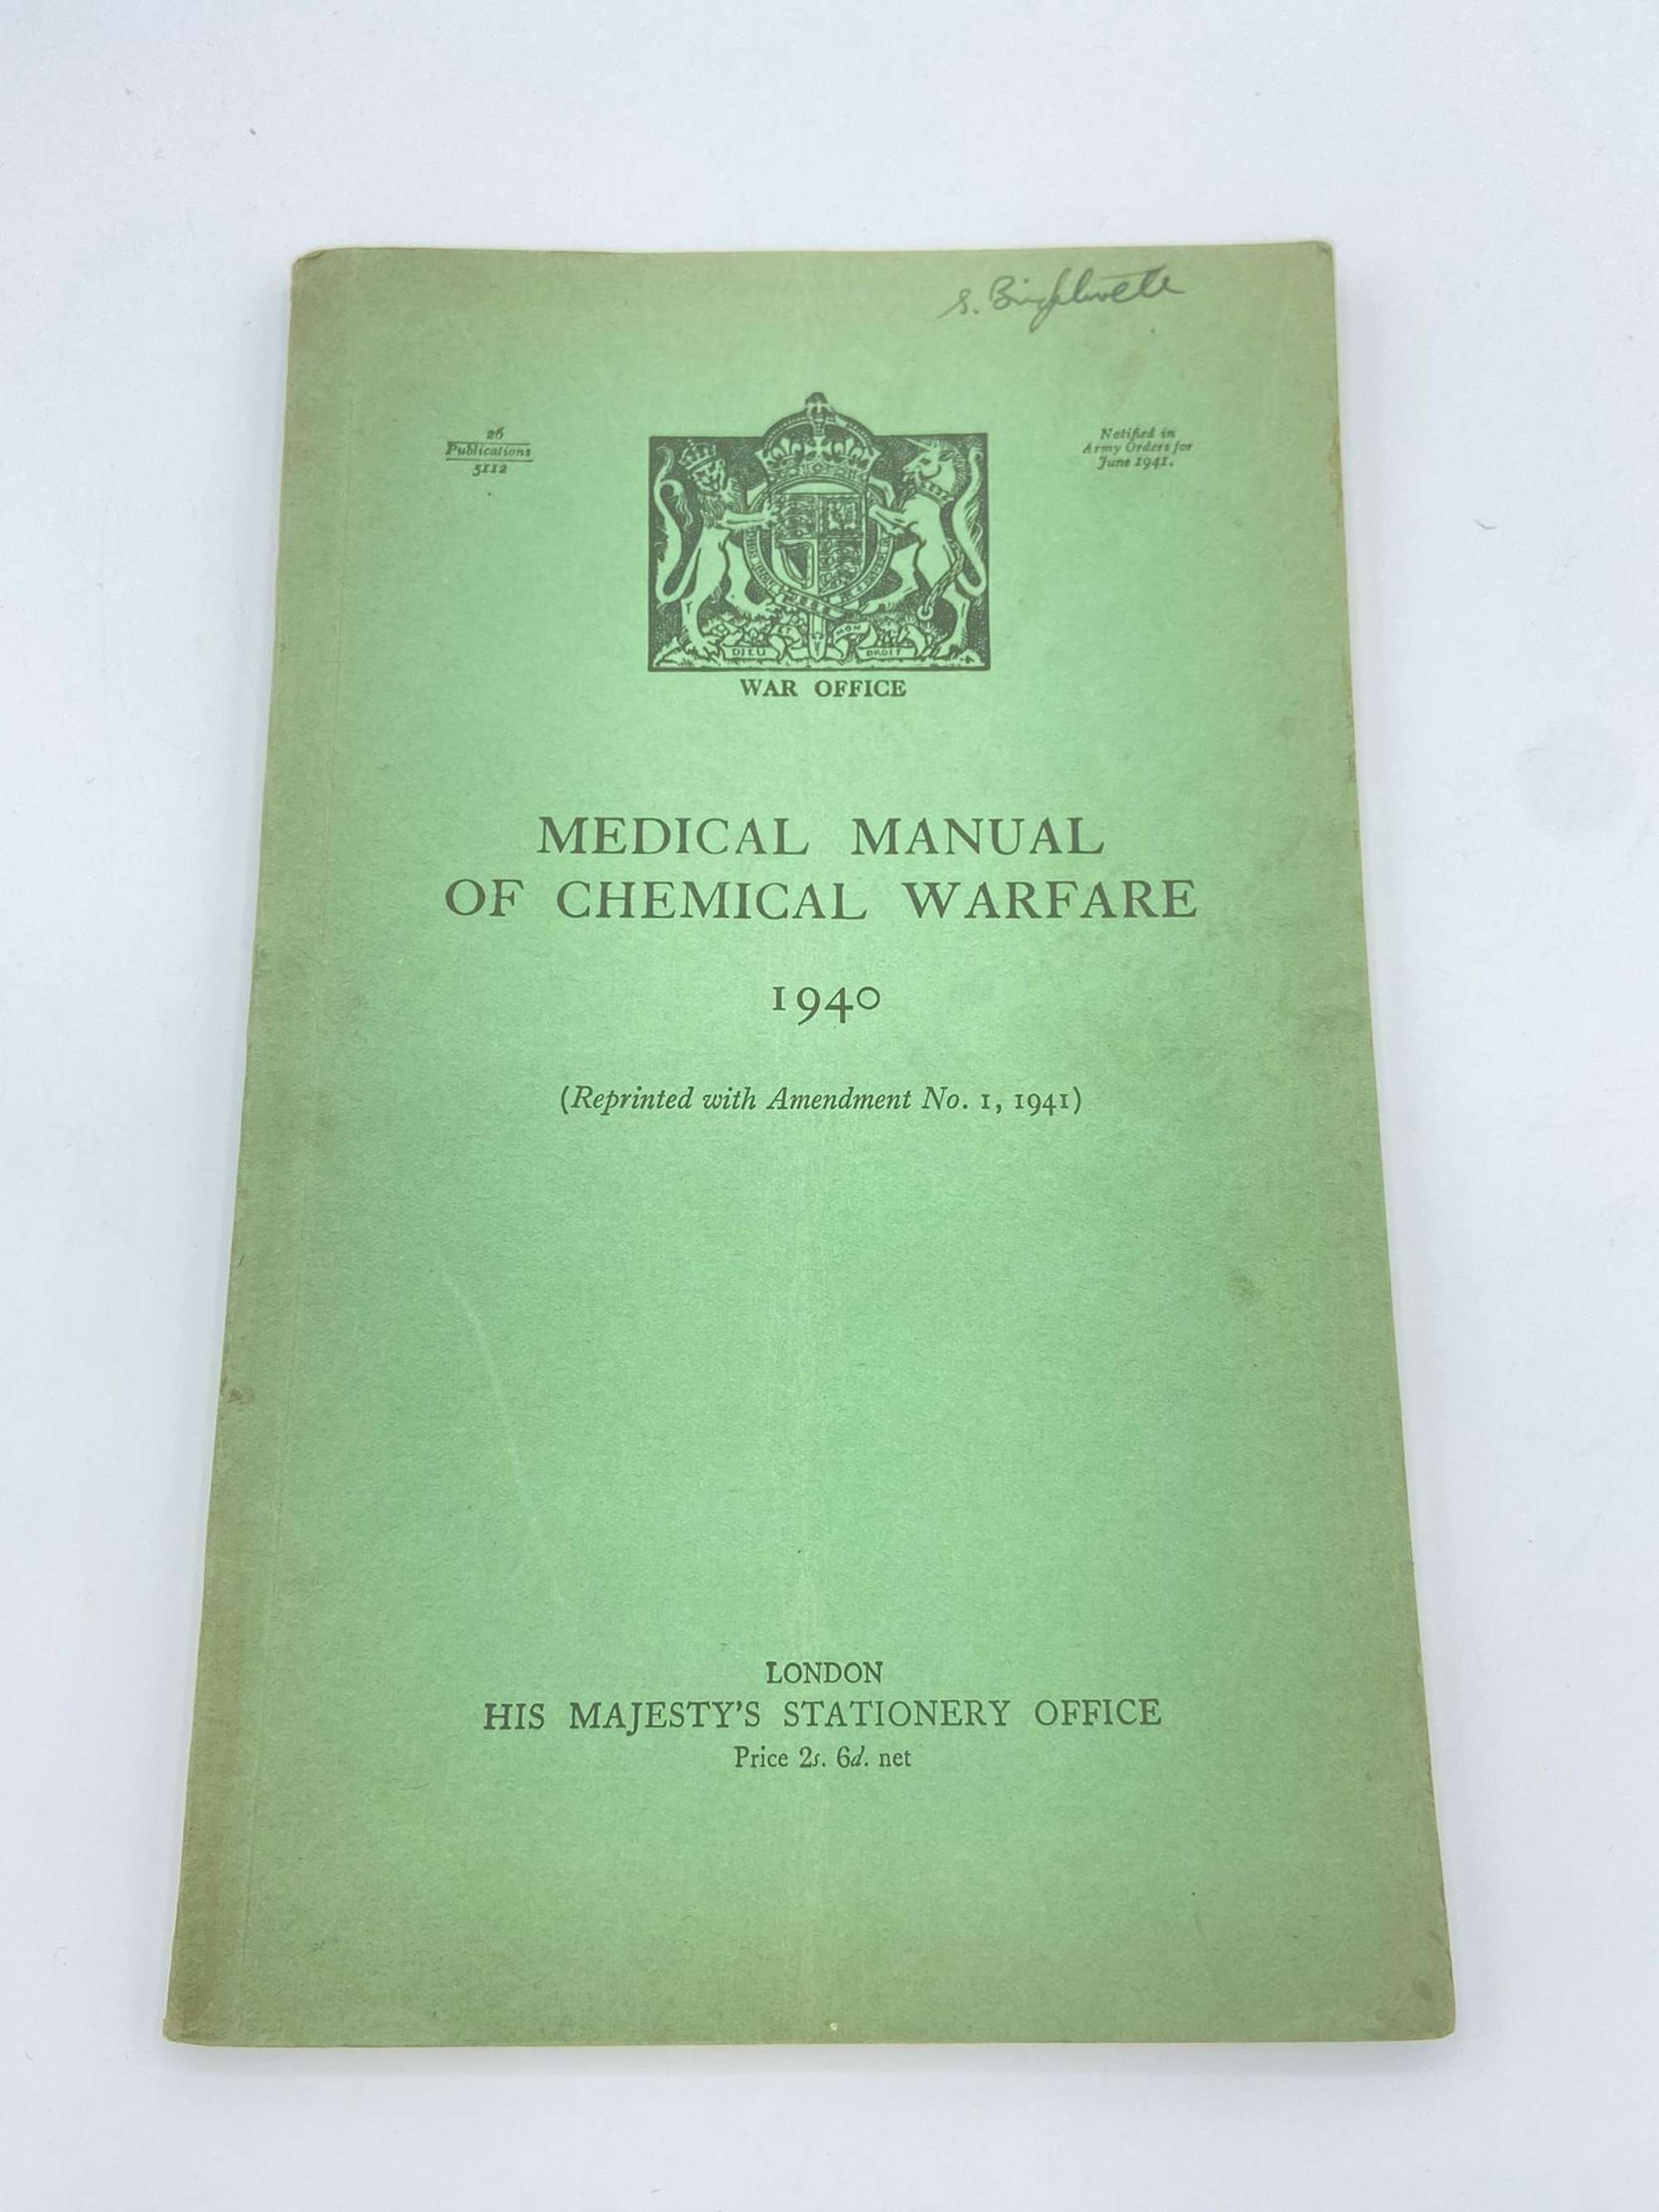 WW2 1940 Medical Manual Of Chemical Warfare War Office Publication